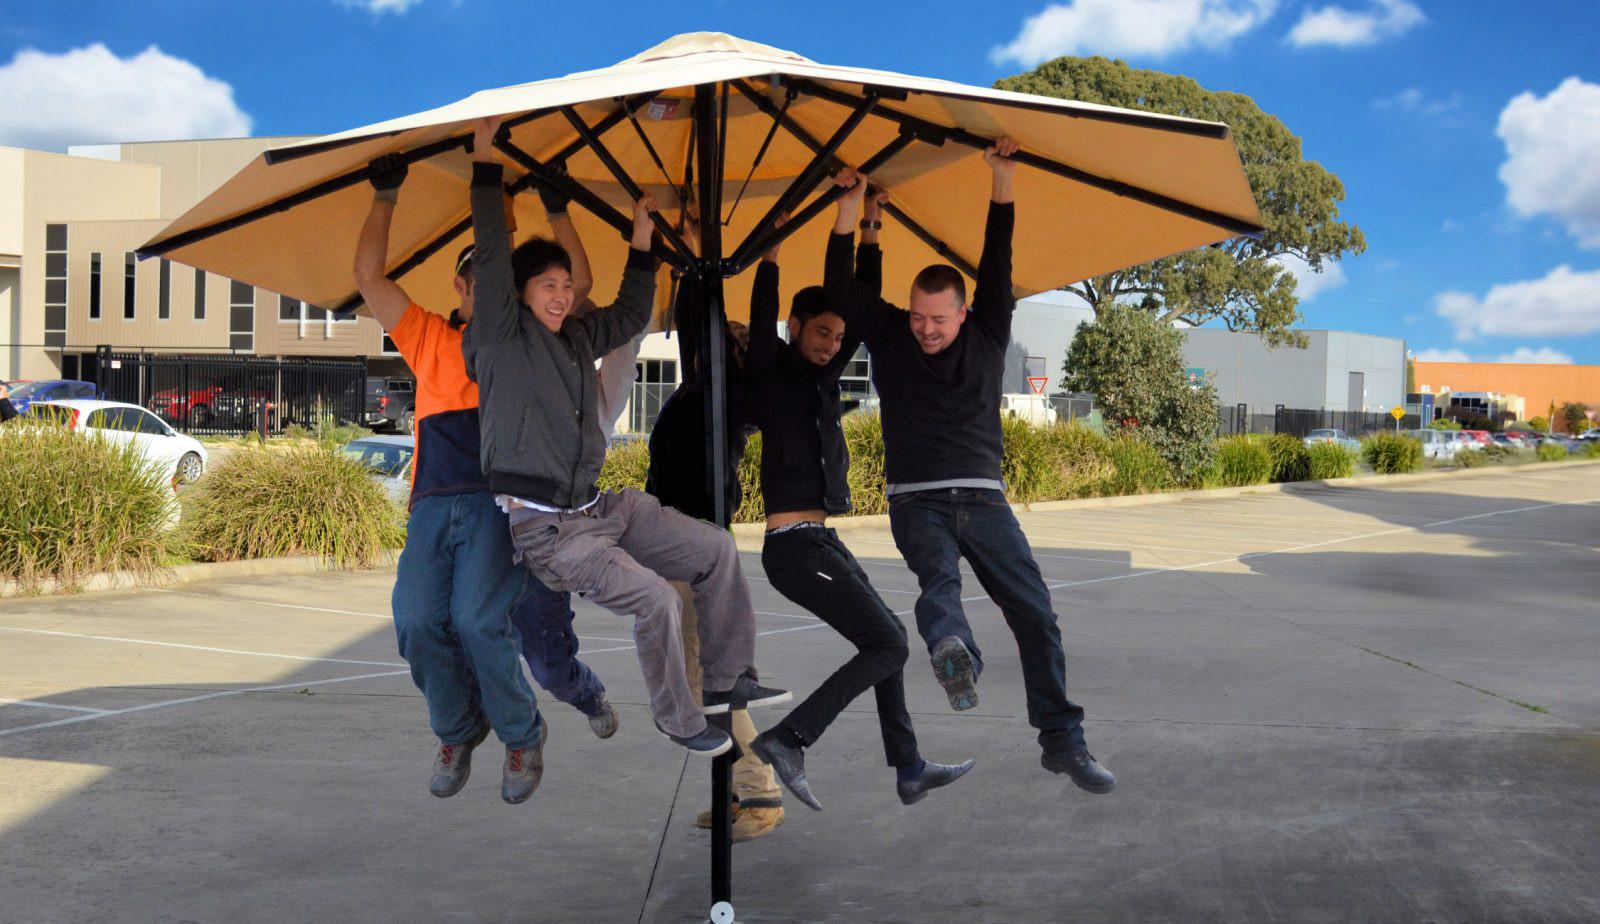 Ausbrella Worlds Strongest Umbrella with 5 men hanging off it